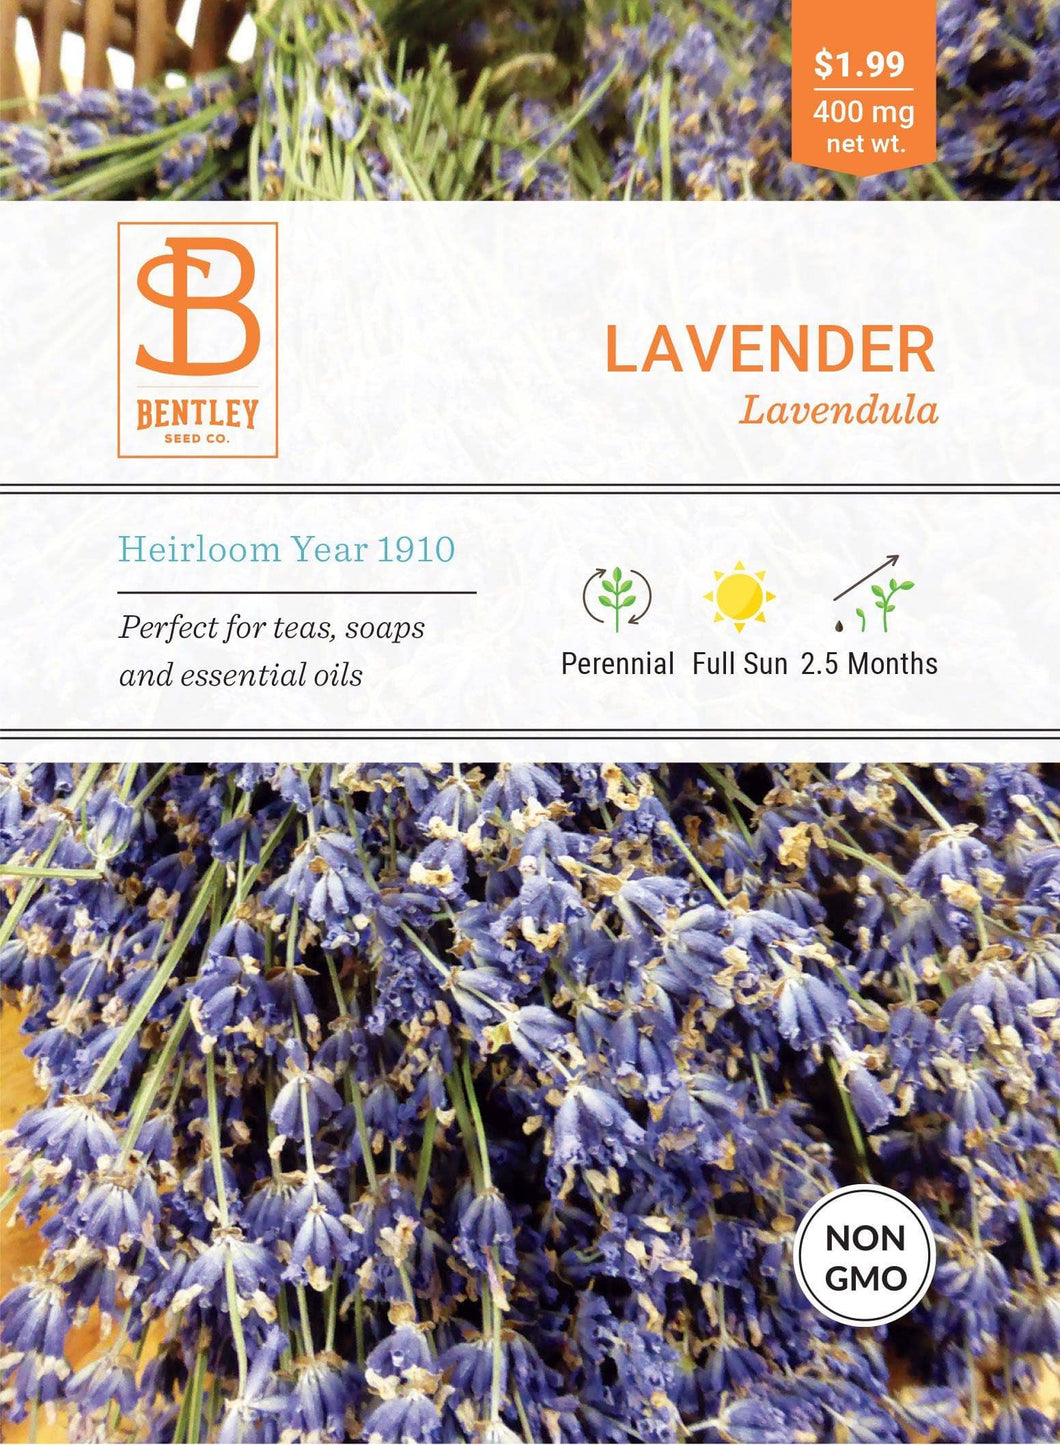 Bentley Seed Co. - Lavender